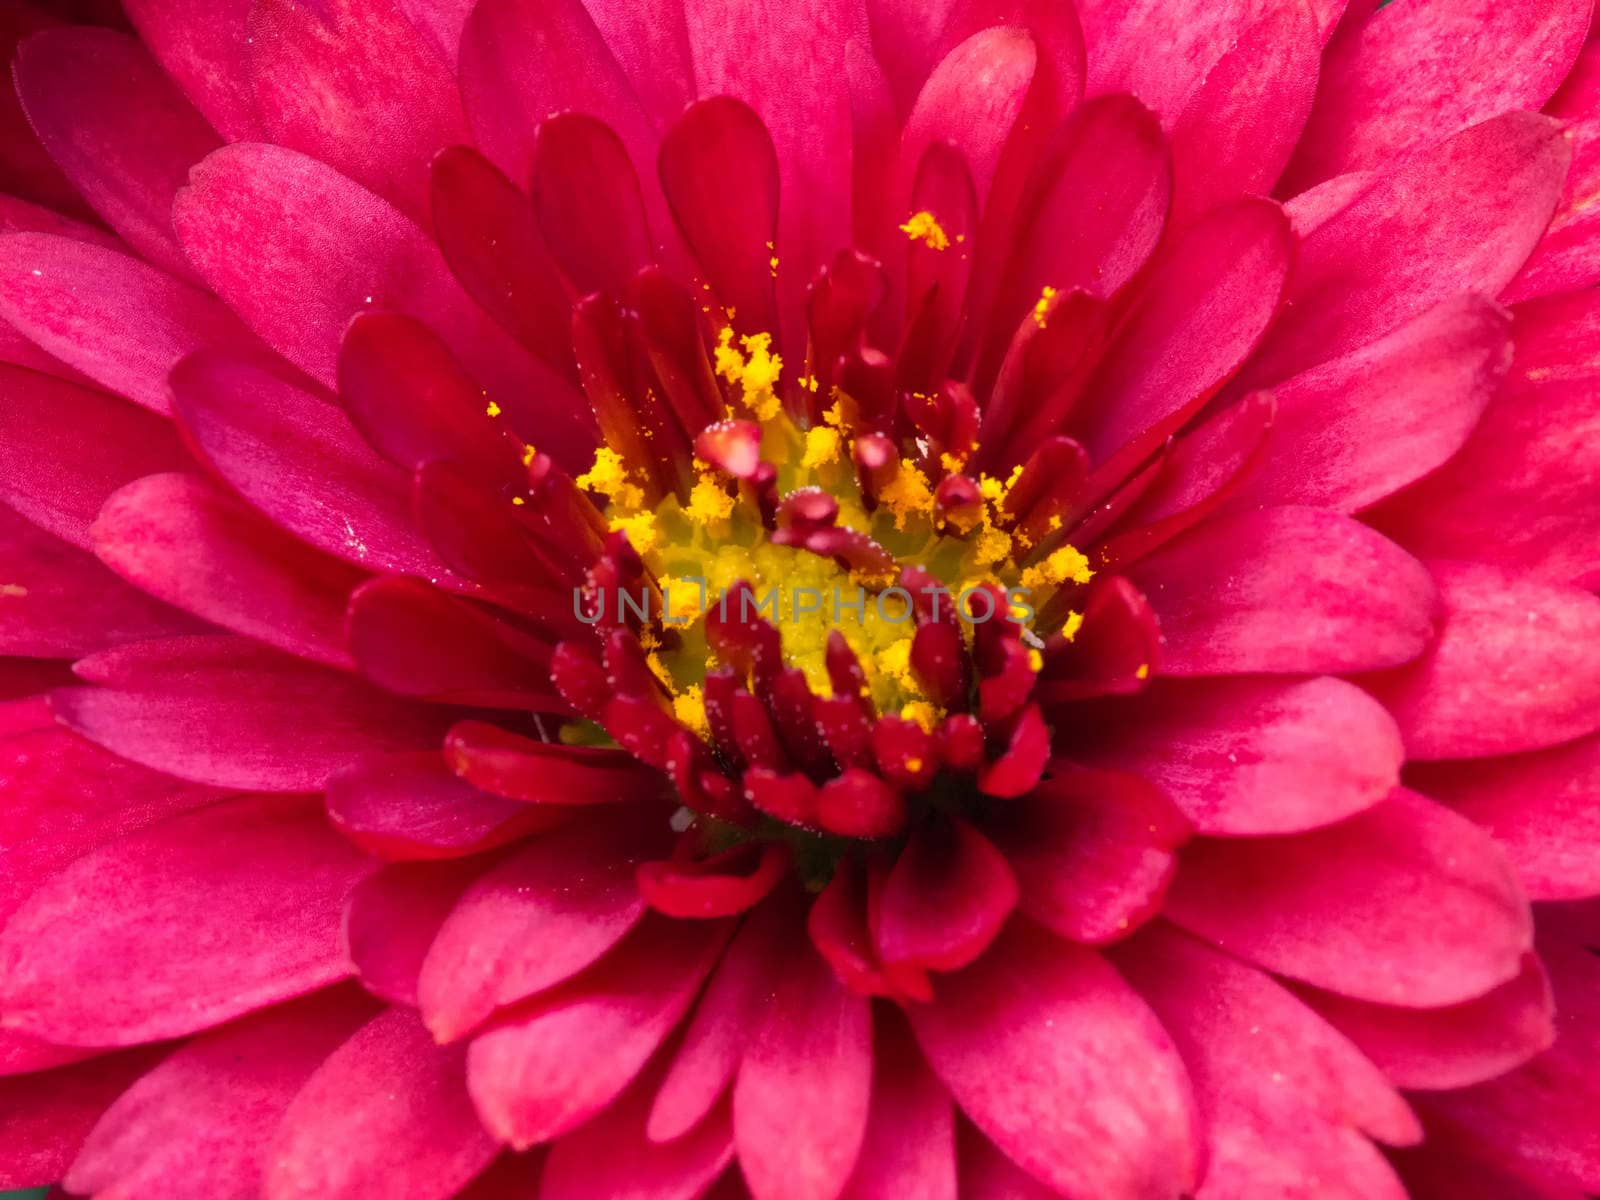 Red Chrysanthemum Daisy Close-up Shot by mroz